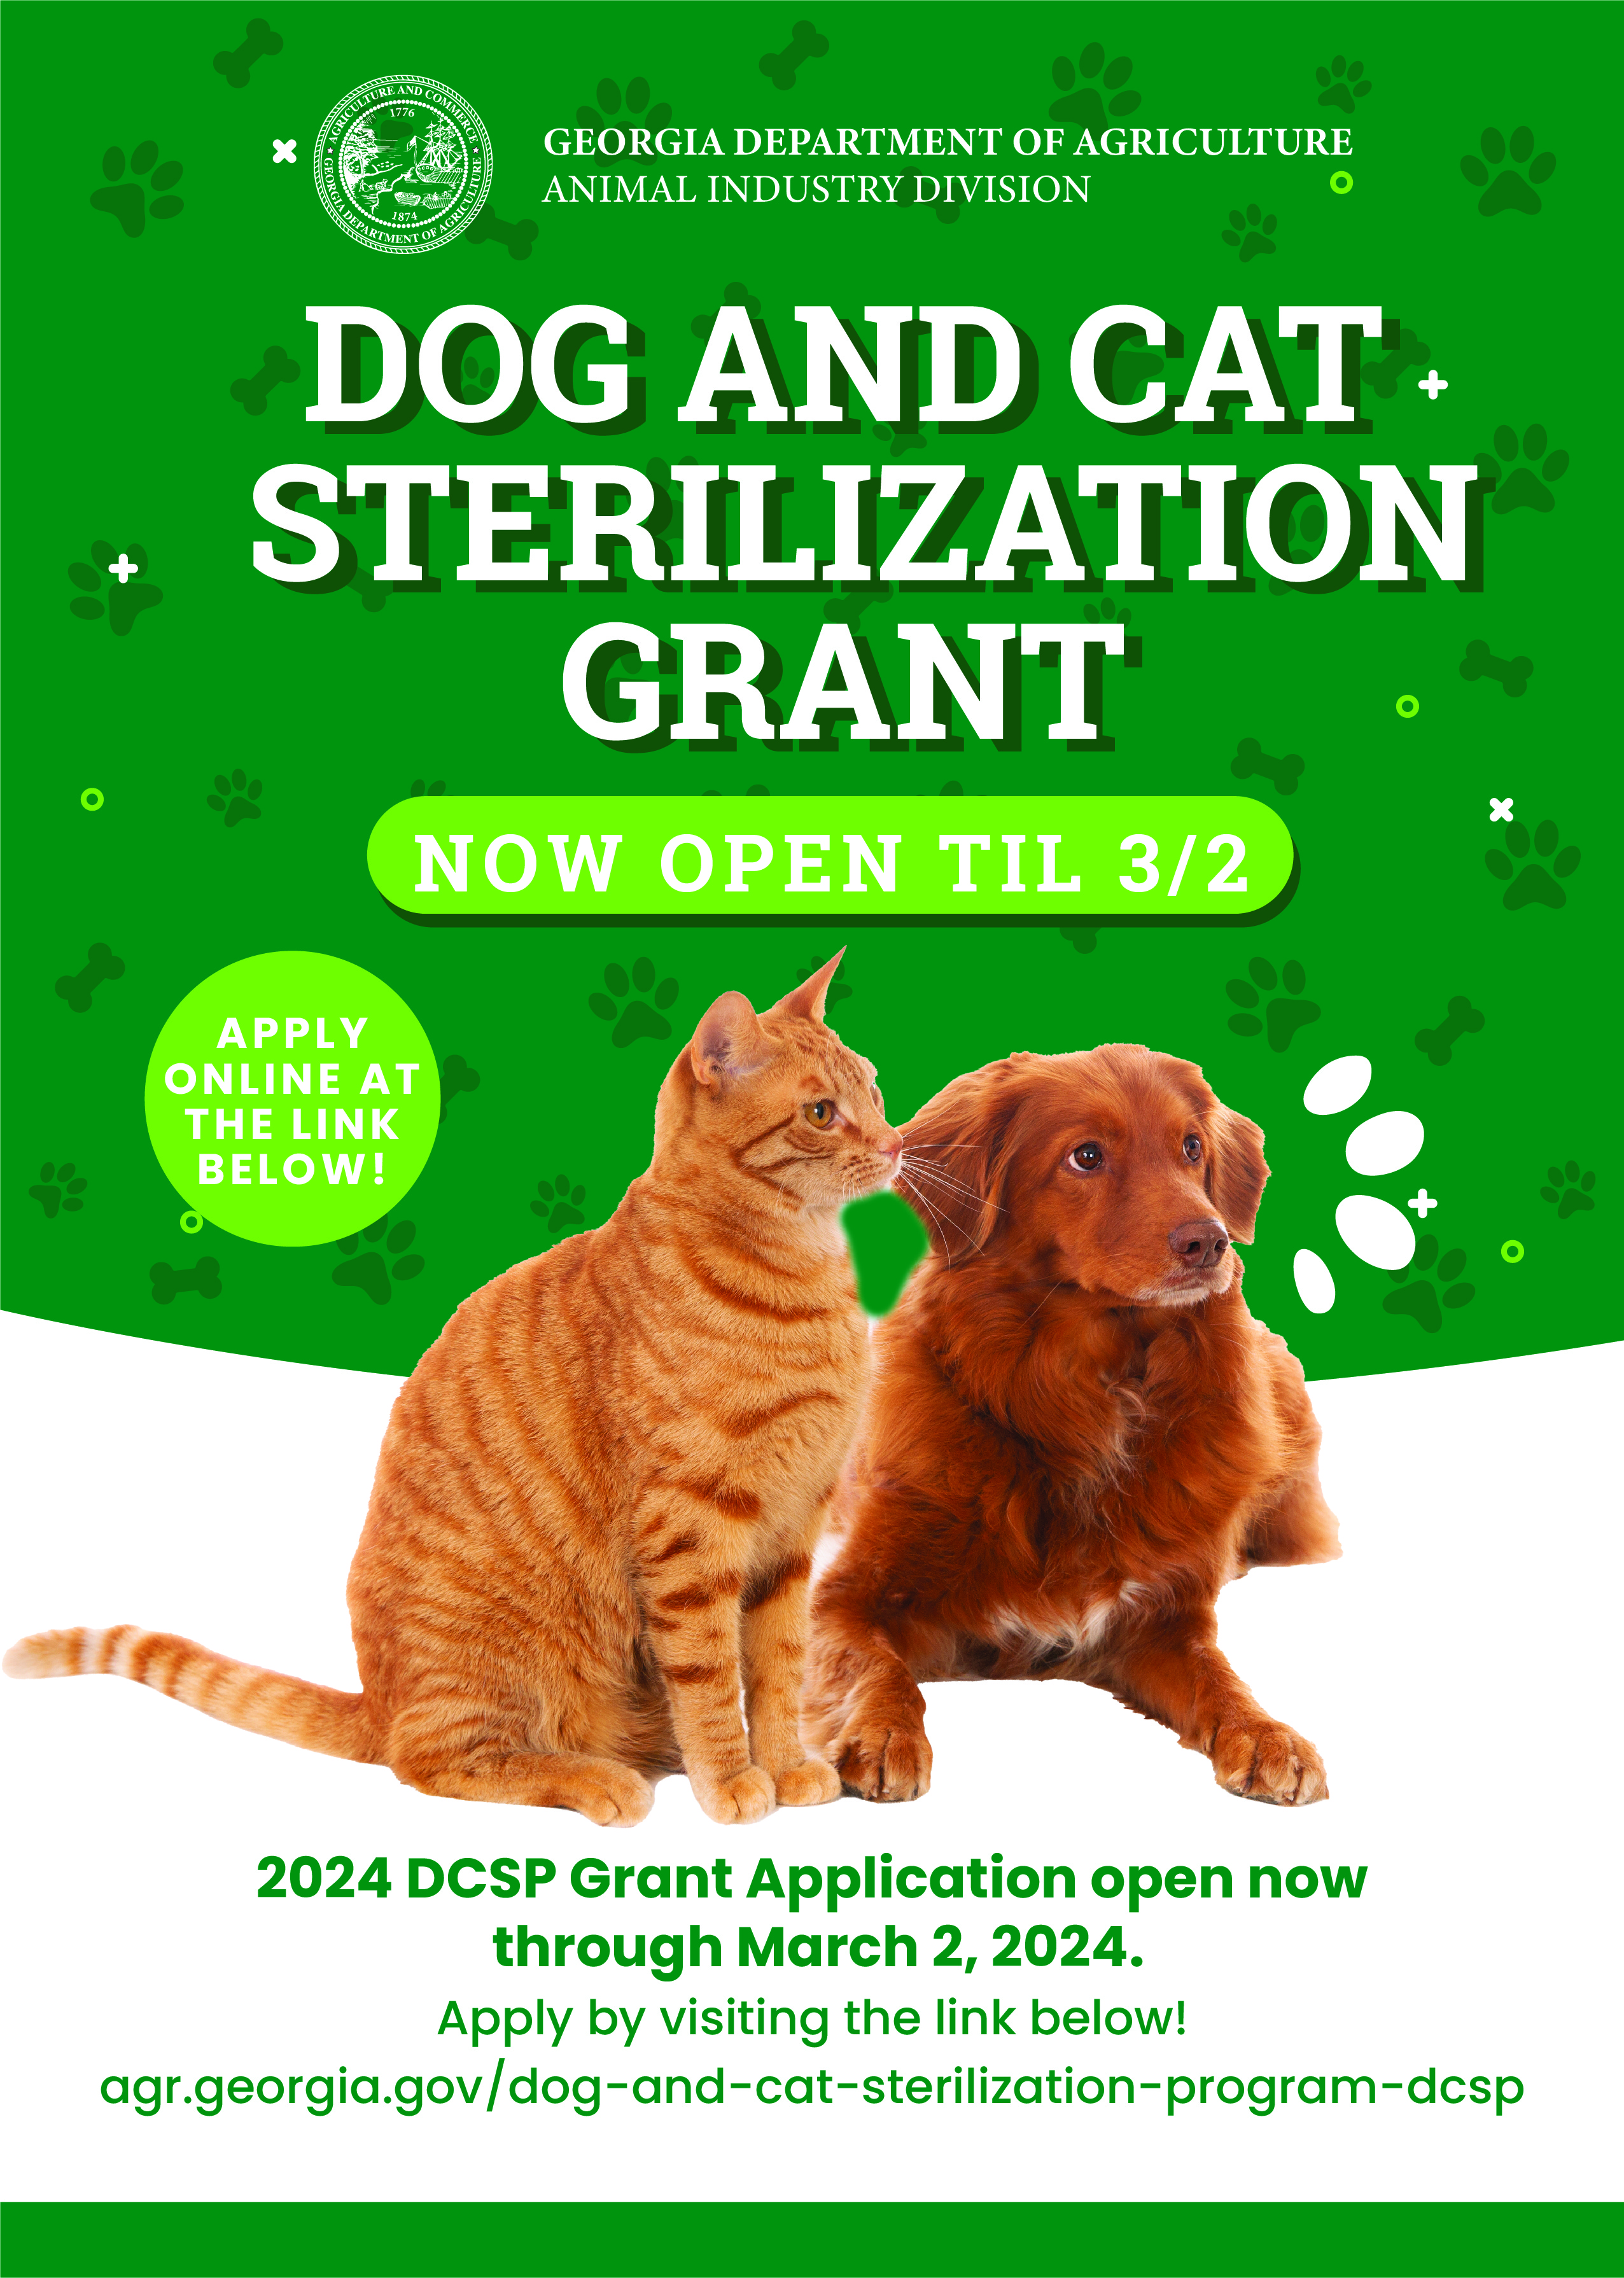 Dog and Cat sterilization program - is open